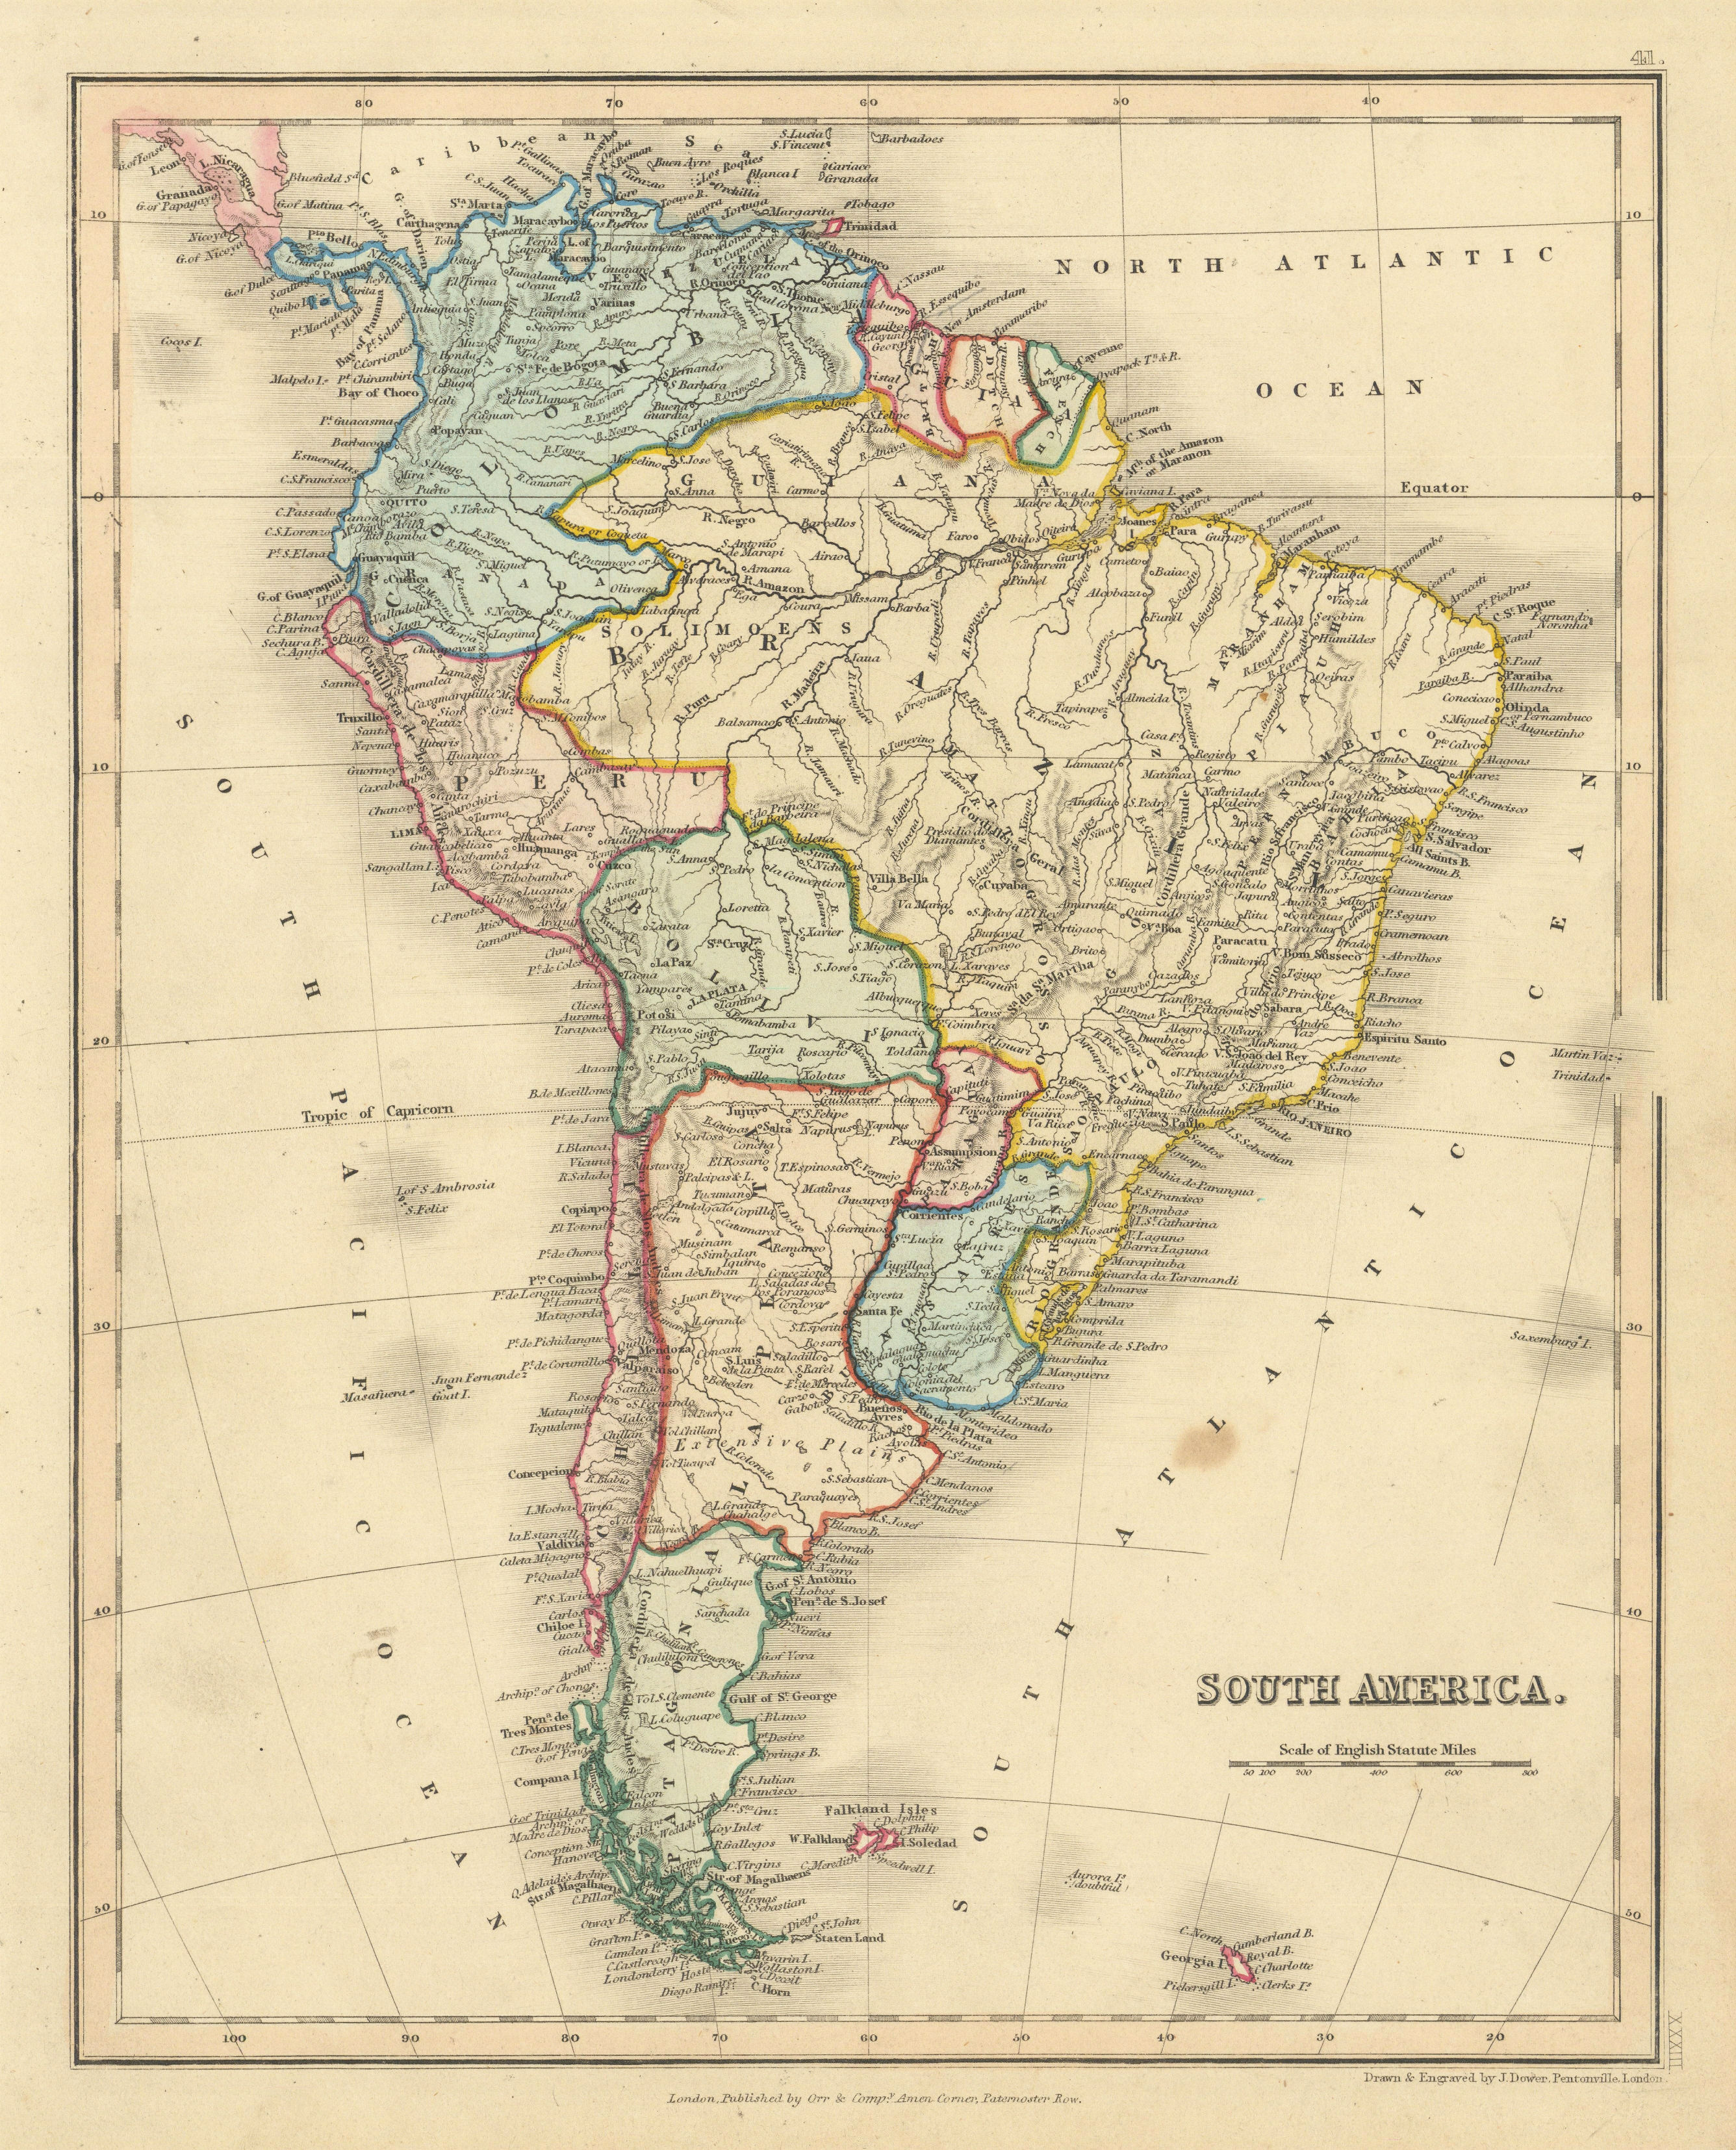 Associate Product South America by John Dower. Gran Colombia. La Plata. Brazil 1845 old map